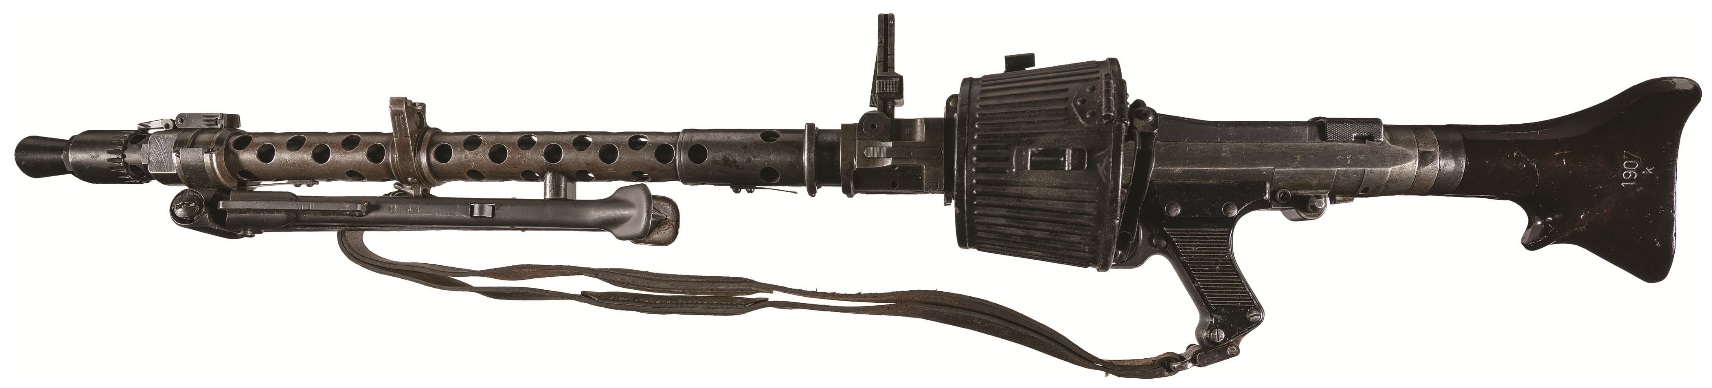 Mg-34man-portable.jpg